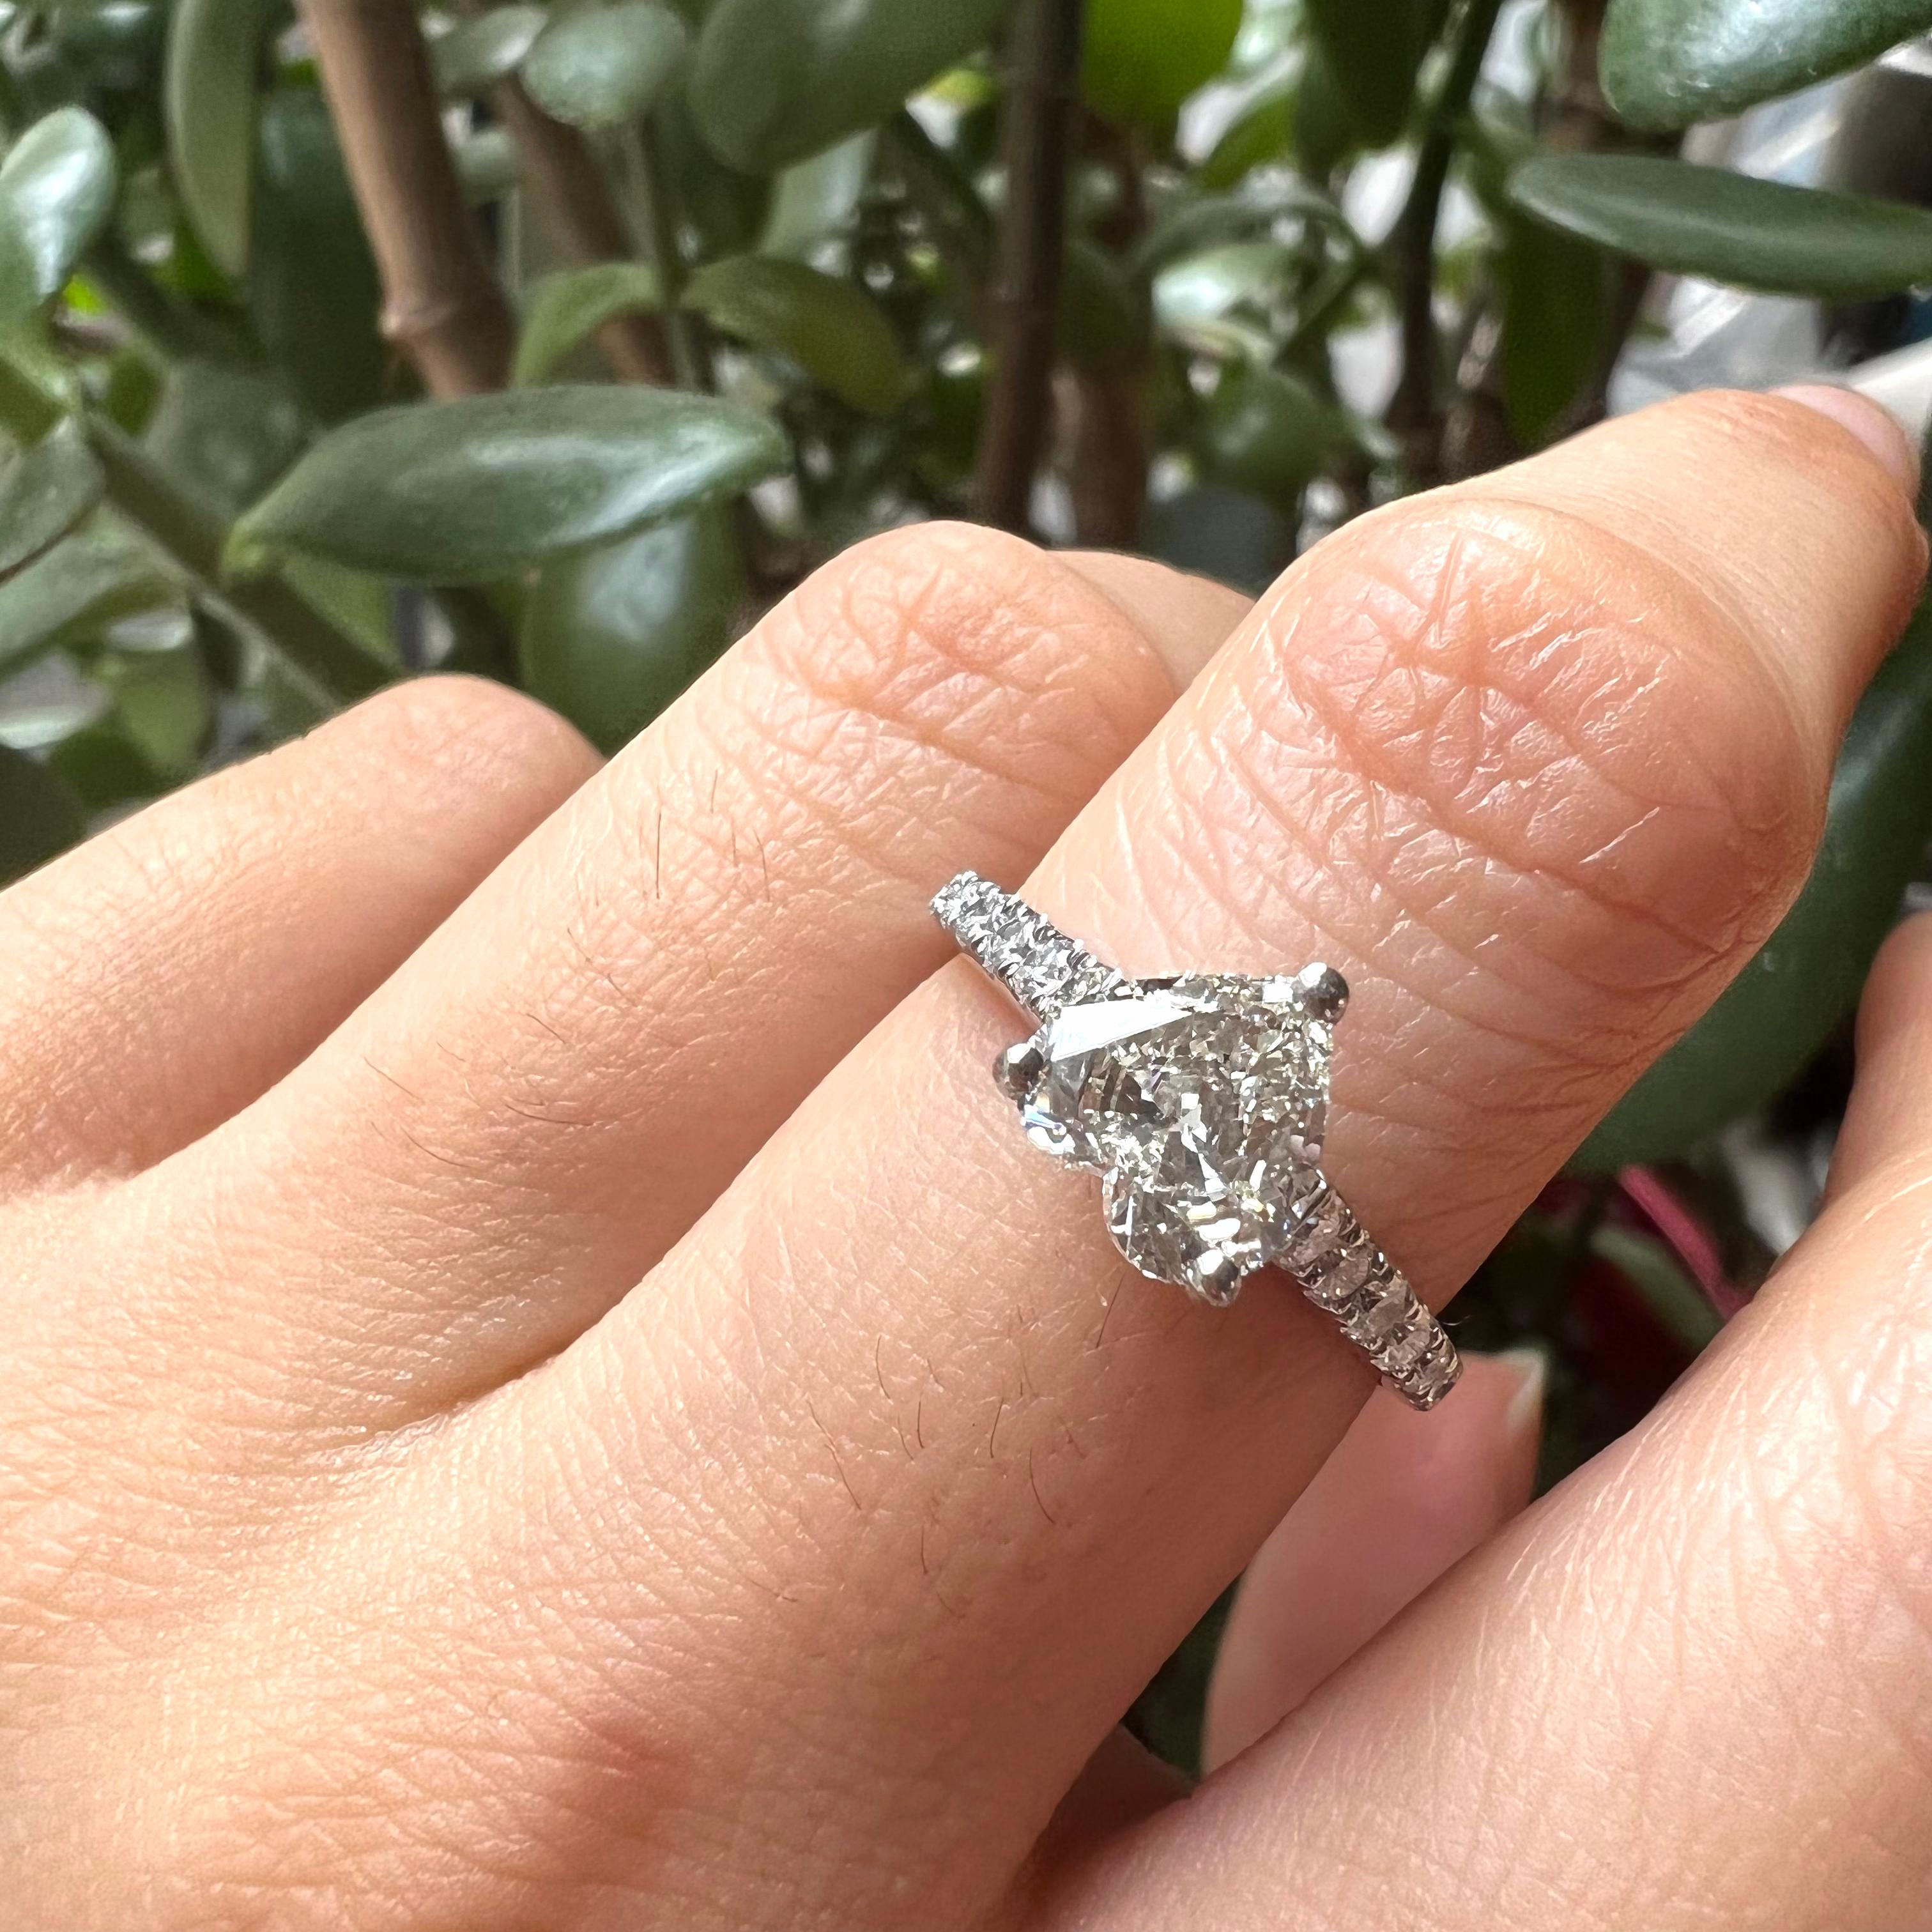 1 carat heart shaped diamond ring